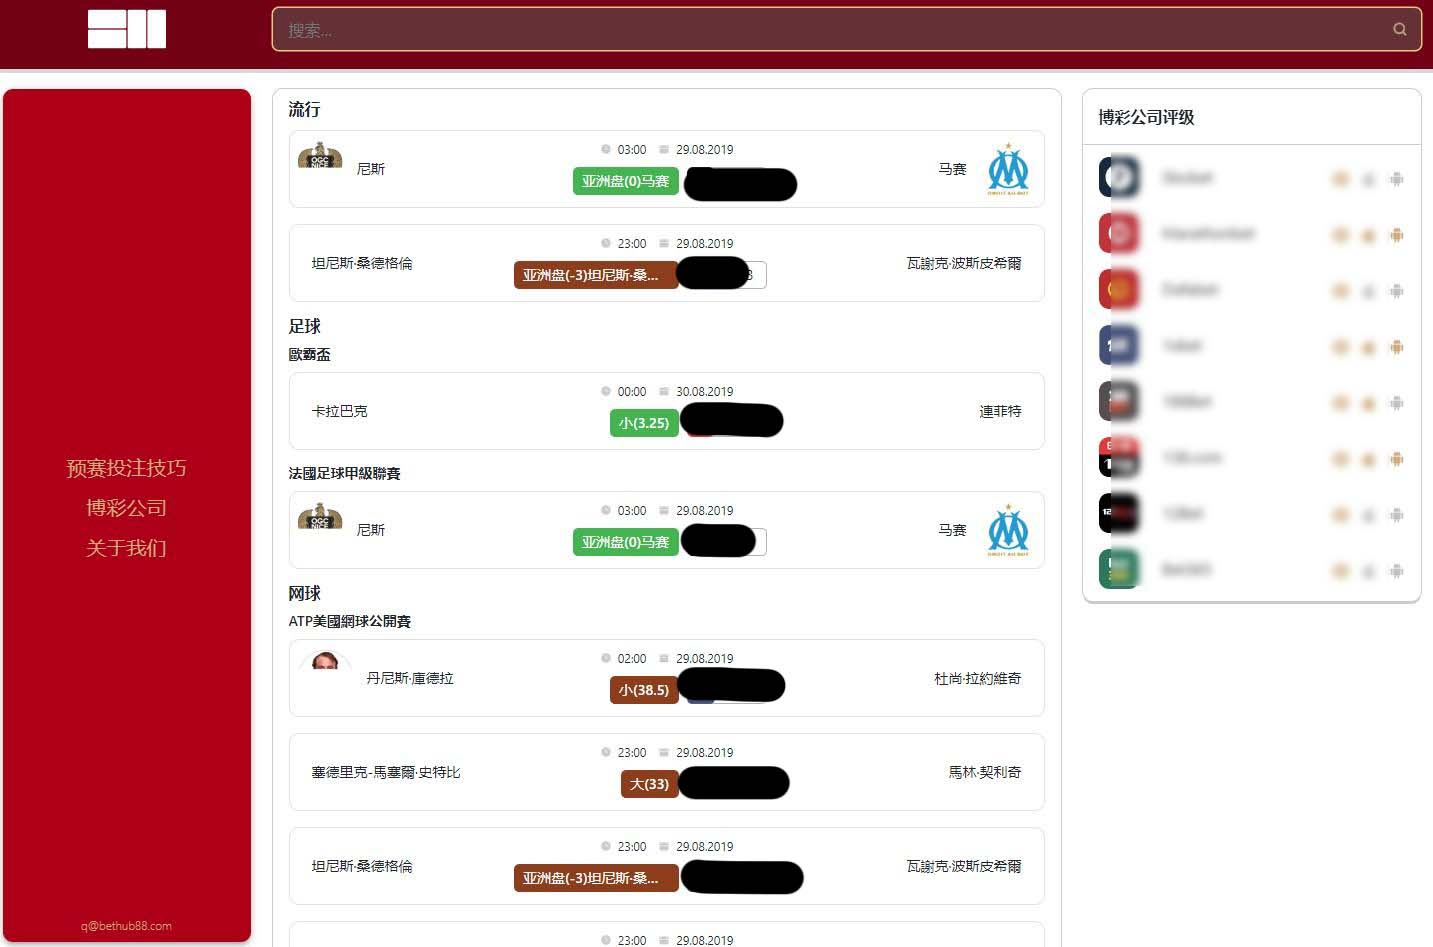  Сайт bethub org на китайском